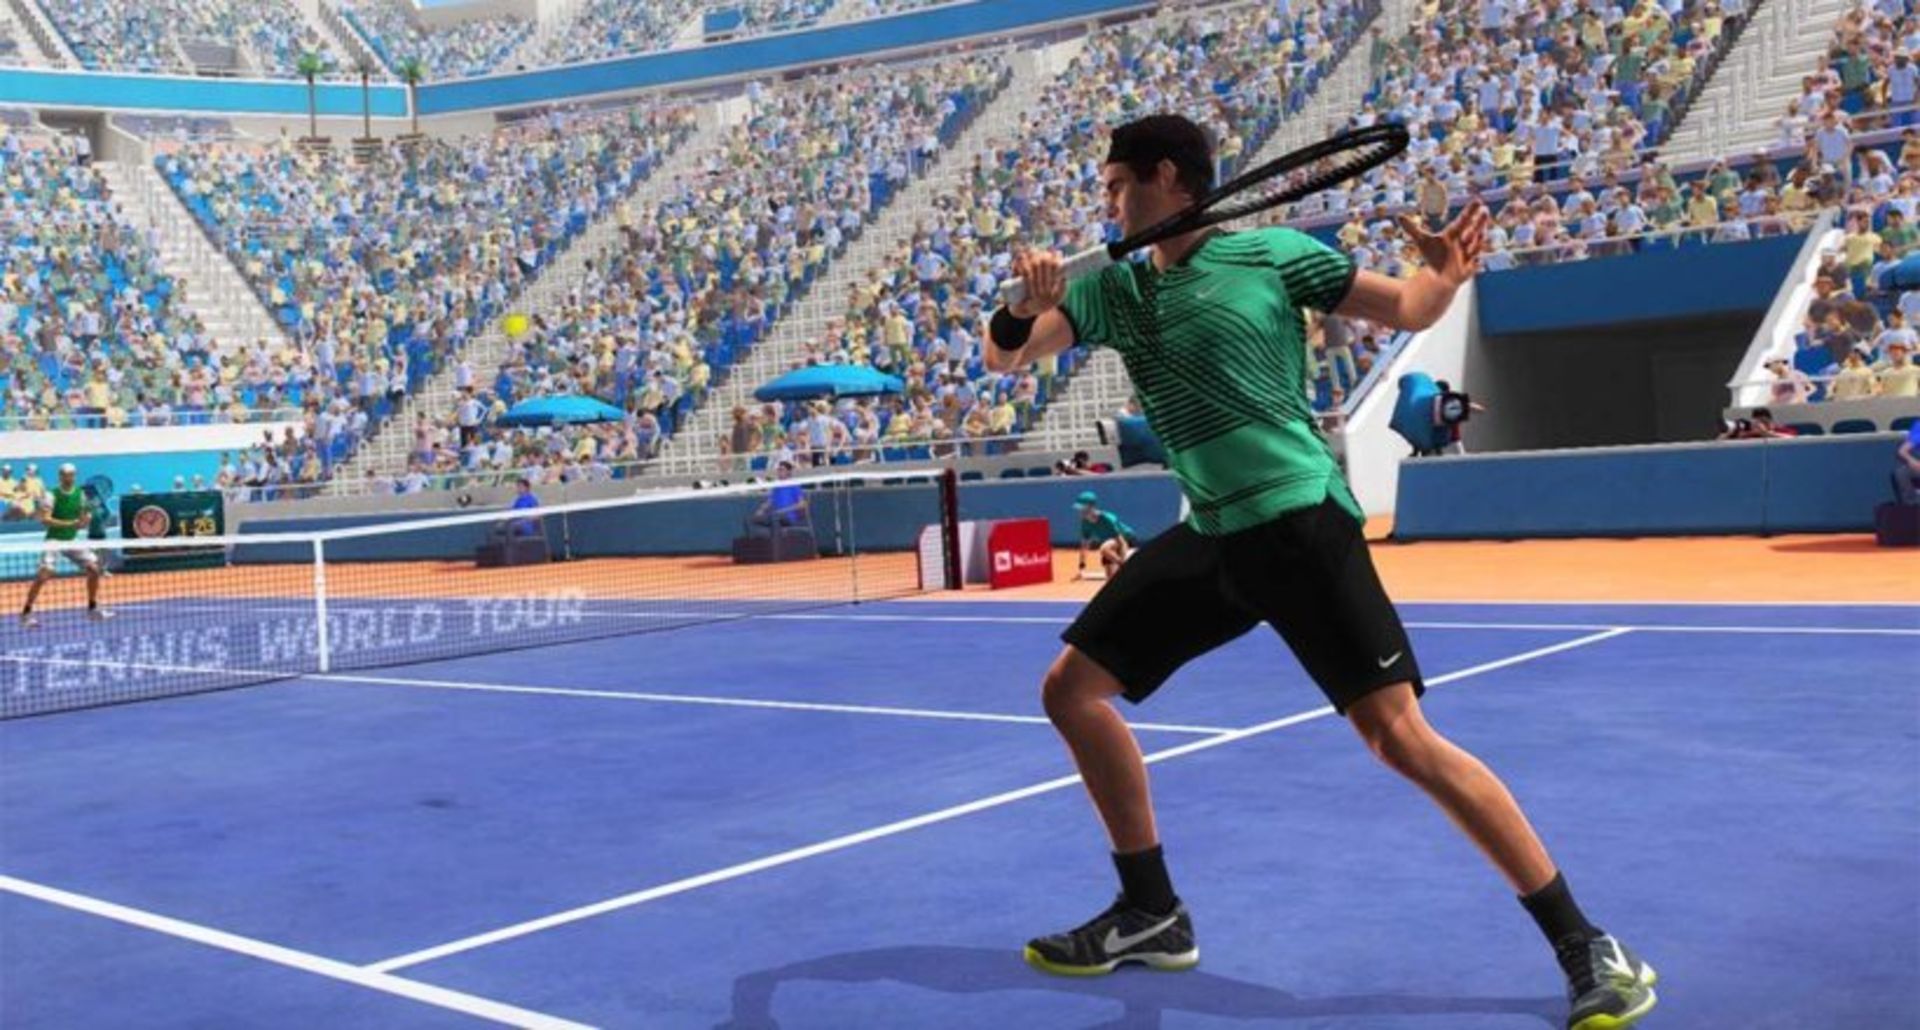 Tennis World Tour 2 gameplay